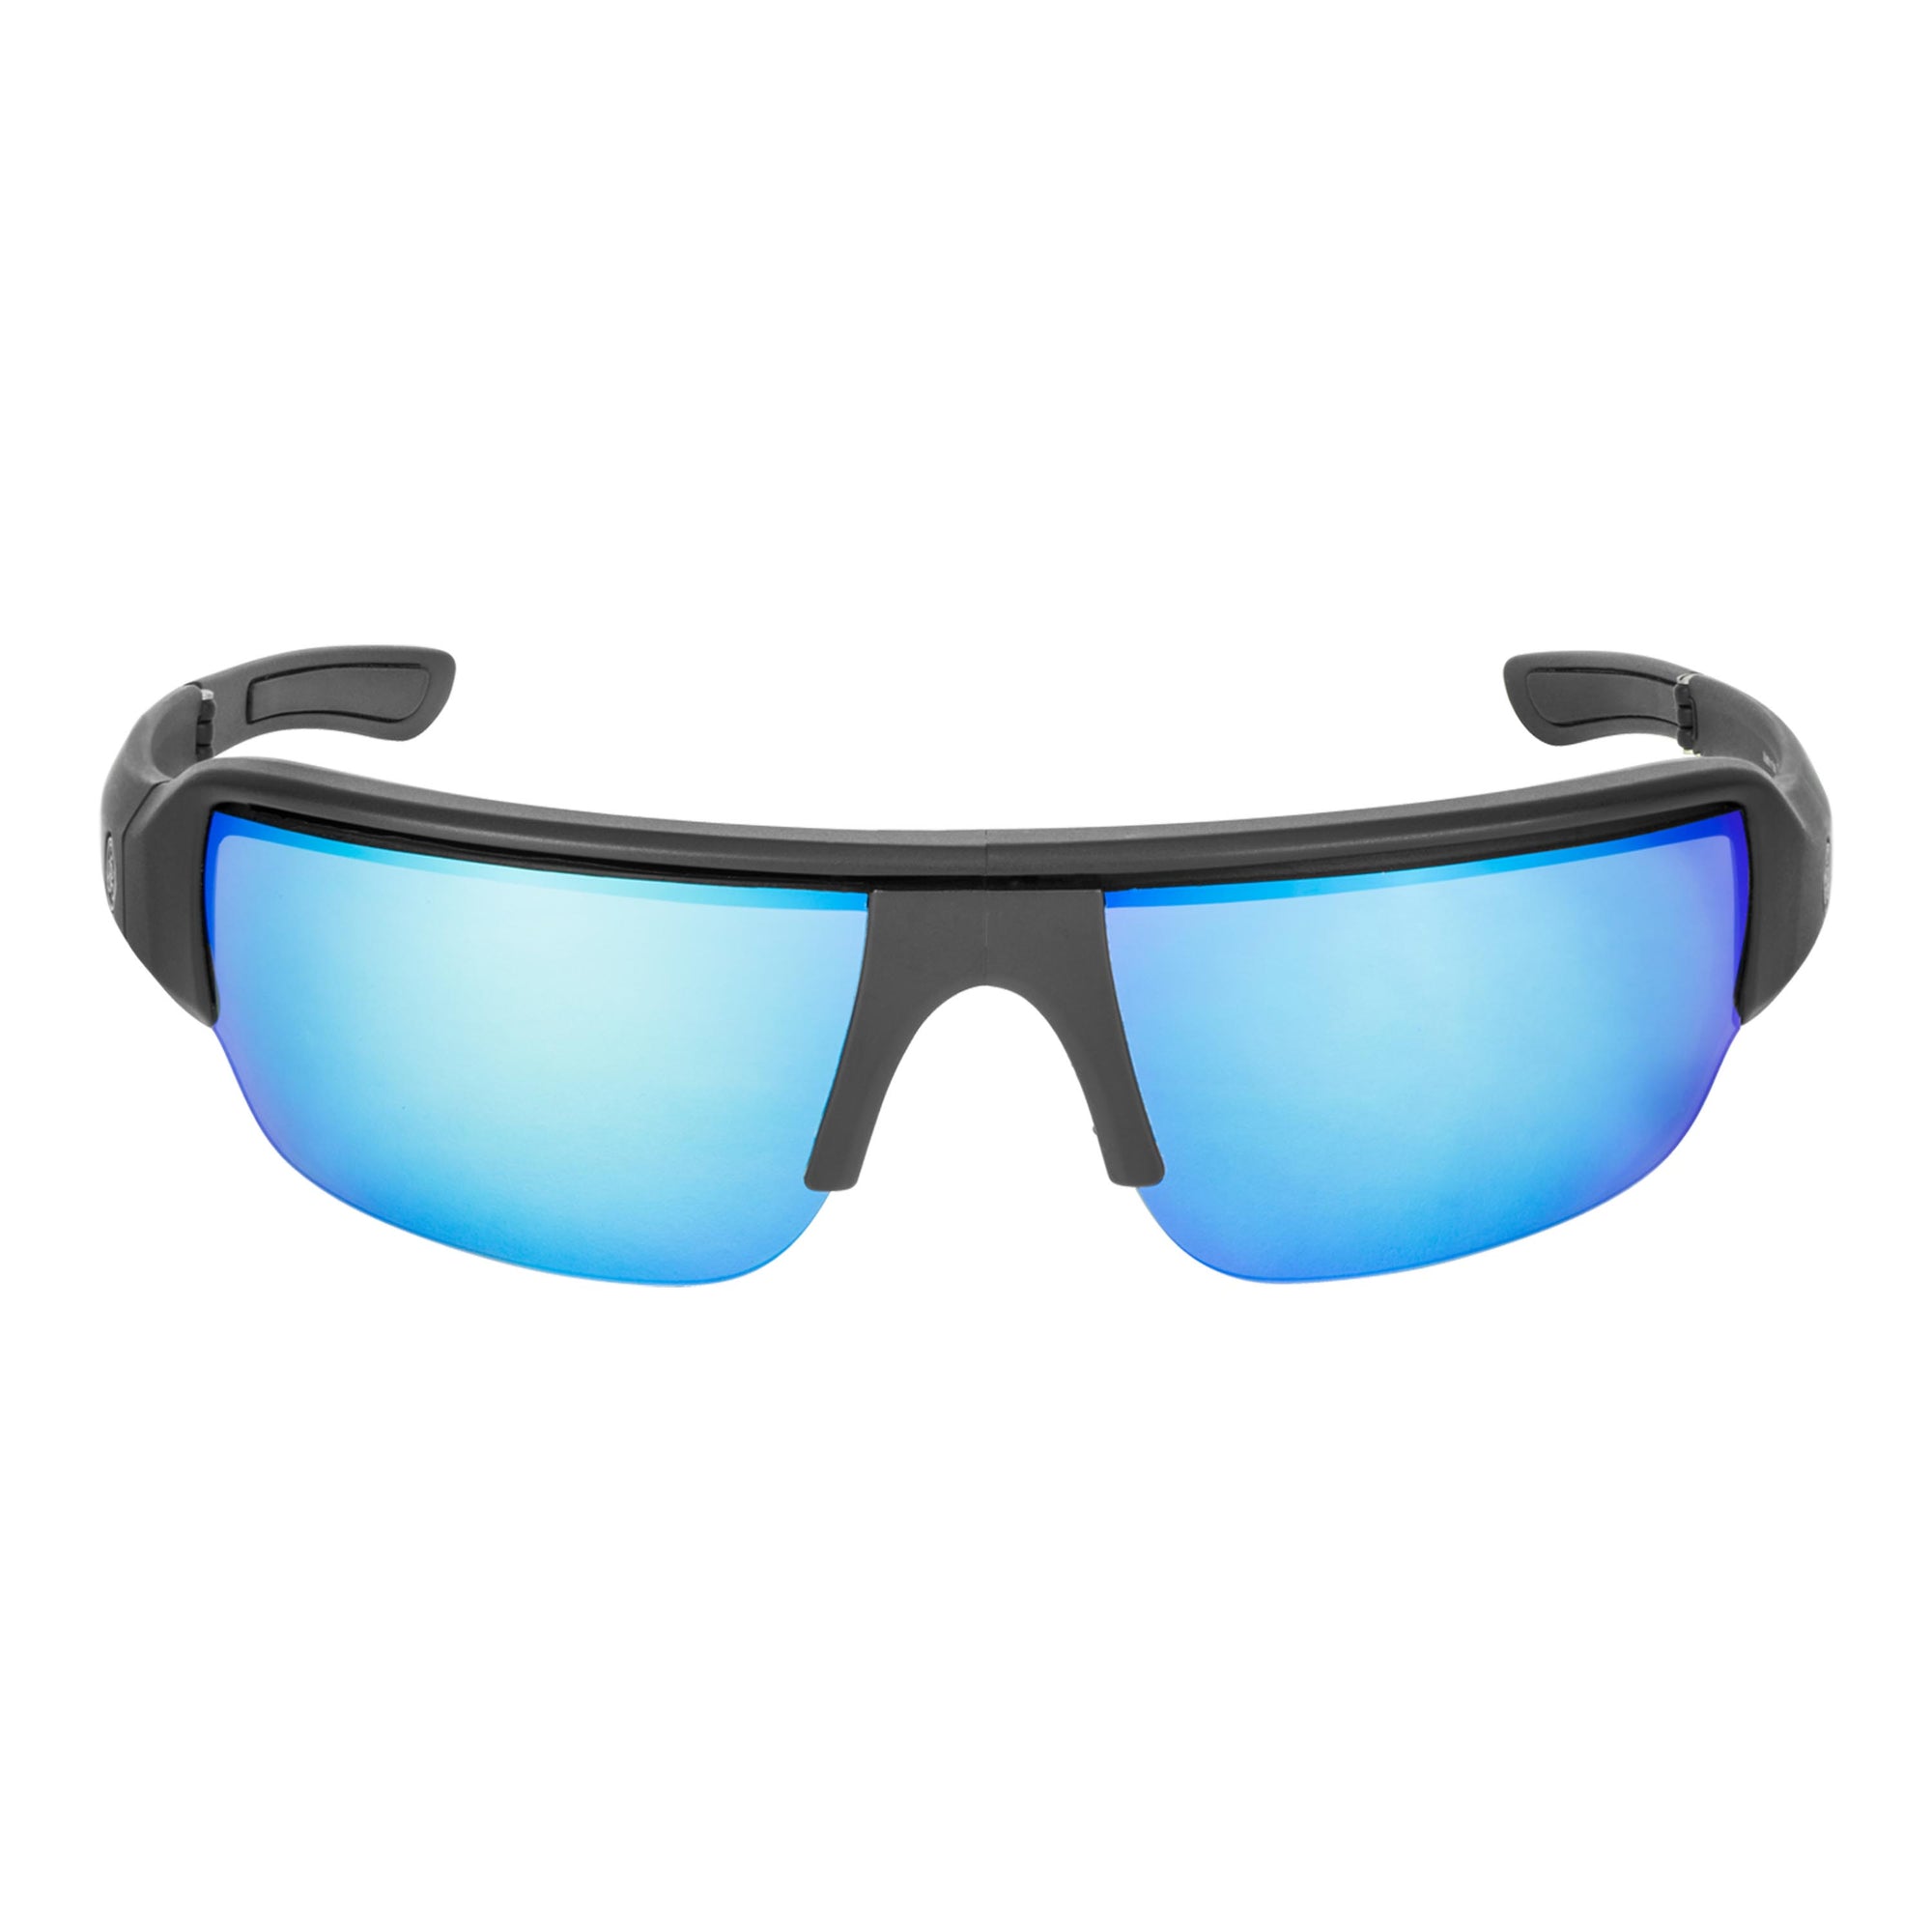 Popticals, Premium Compact Sunglasses, PopGun, 010010-BMUN, Polarized Sunglasses, Matte Black Frame, Gray Lenses w/Blue Mirror Finish, Front View